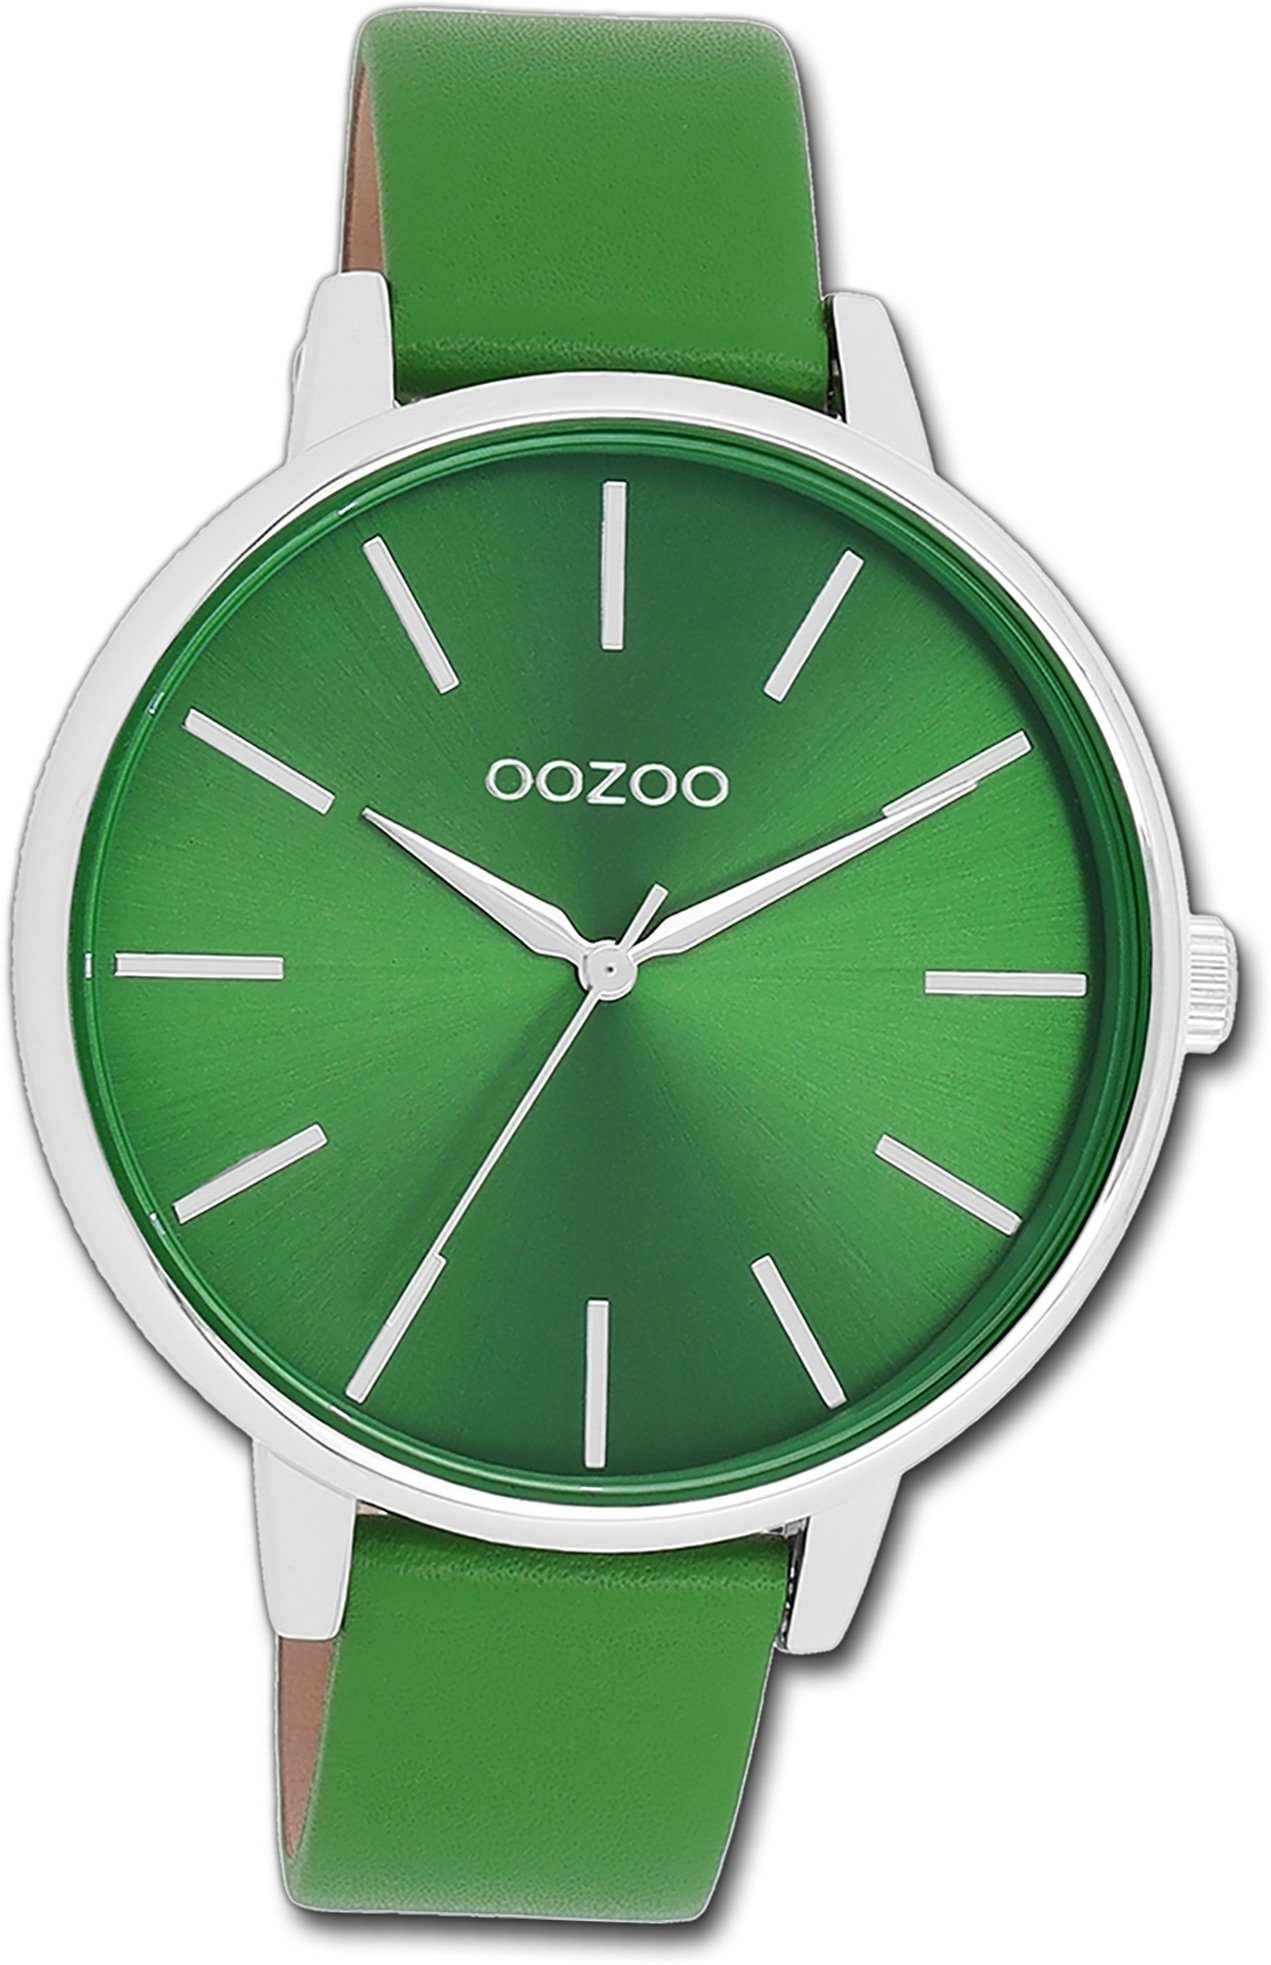 OOZOO Quarzuhr (ca. Oozoo groß grün, Armbanduhr 42mm) Timepieces, Damen Lederarmband rundes Gehäuse, Damenuhr